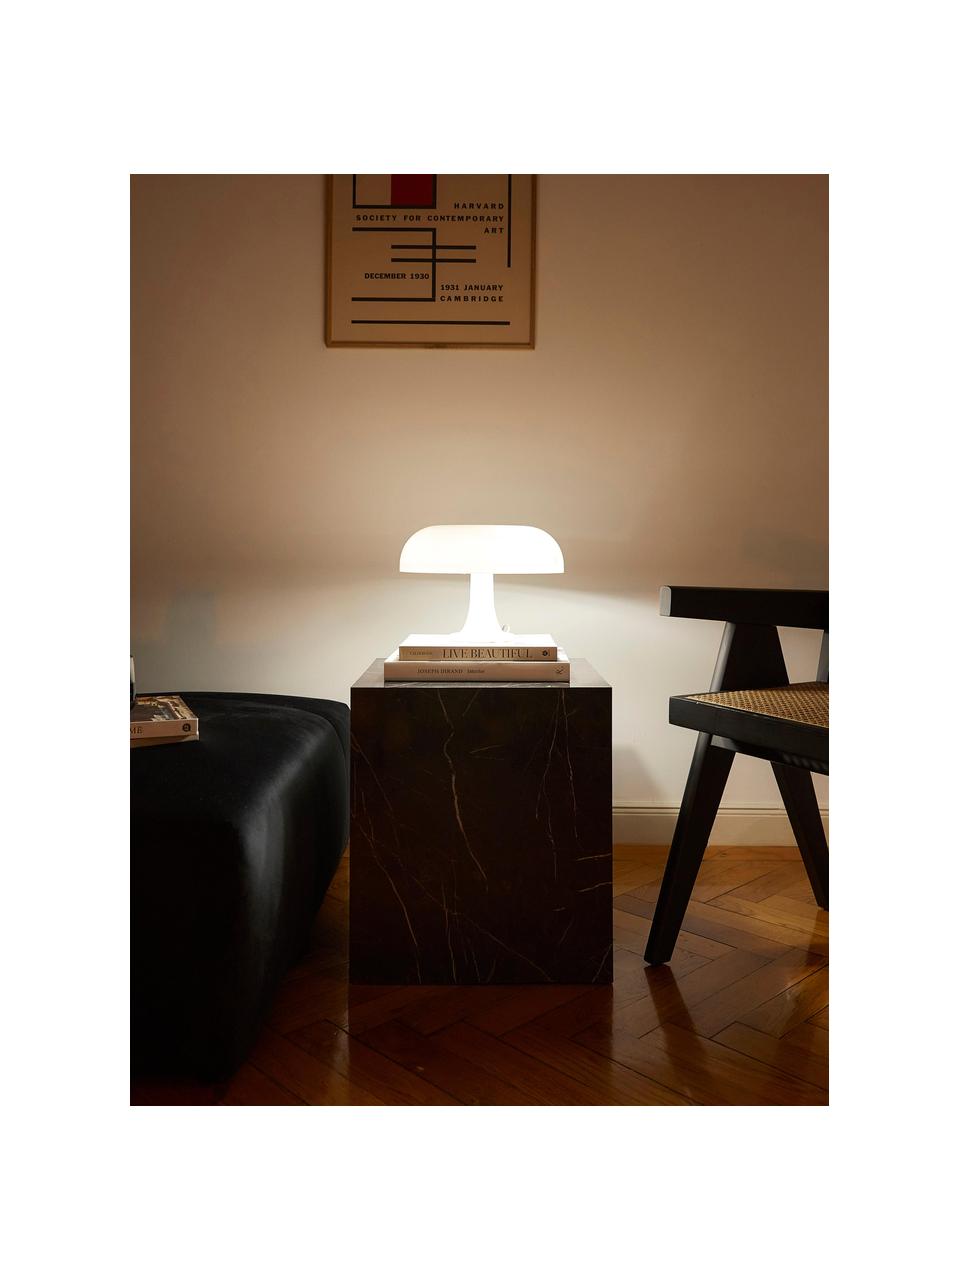 Stolní lampa Nessino, Polykarbonát, Bílá, Ø 32 cm, V 22 cm